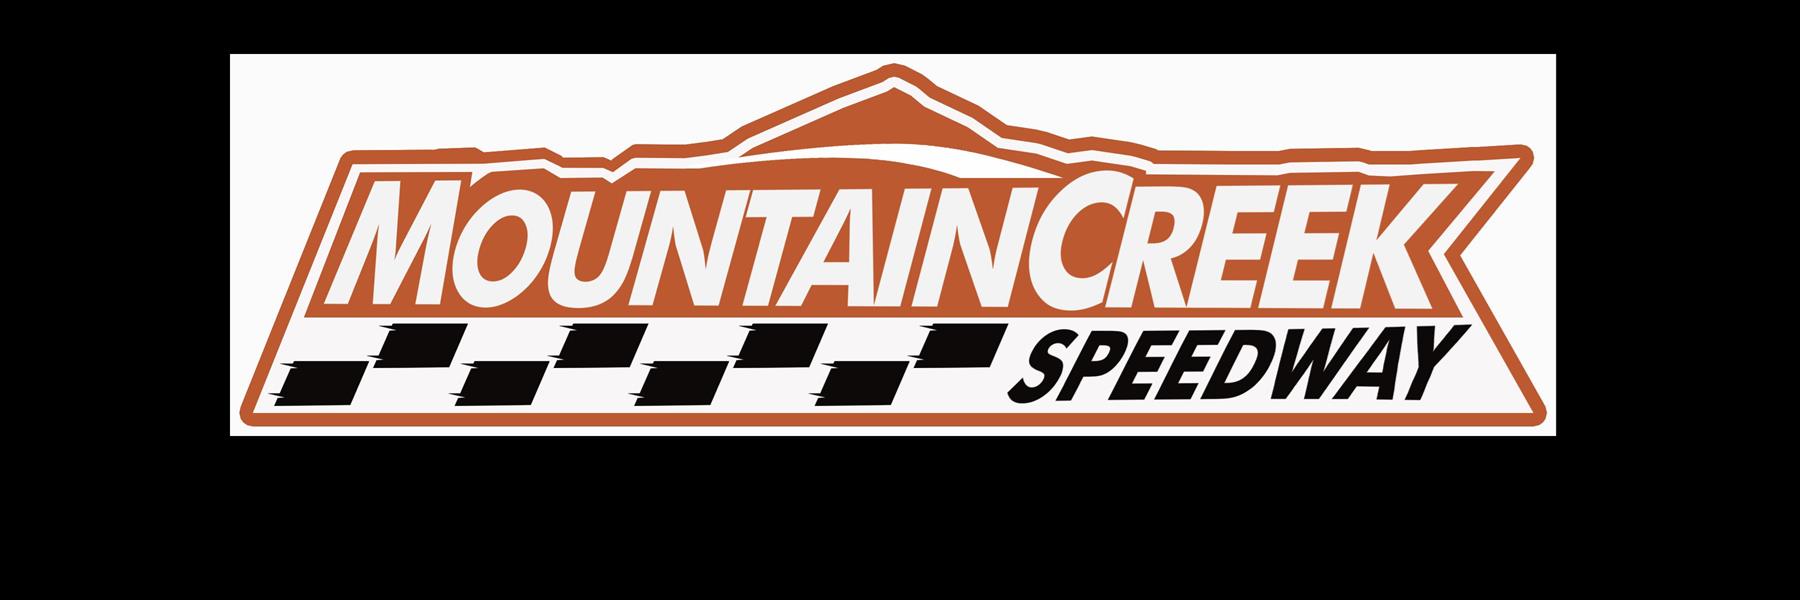 5/14/2022 - Mountain Creek Speedway